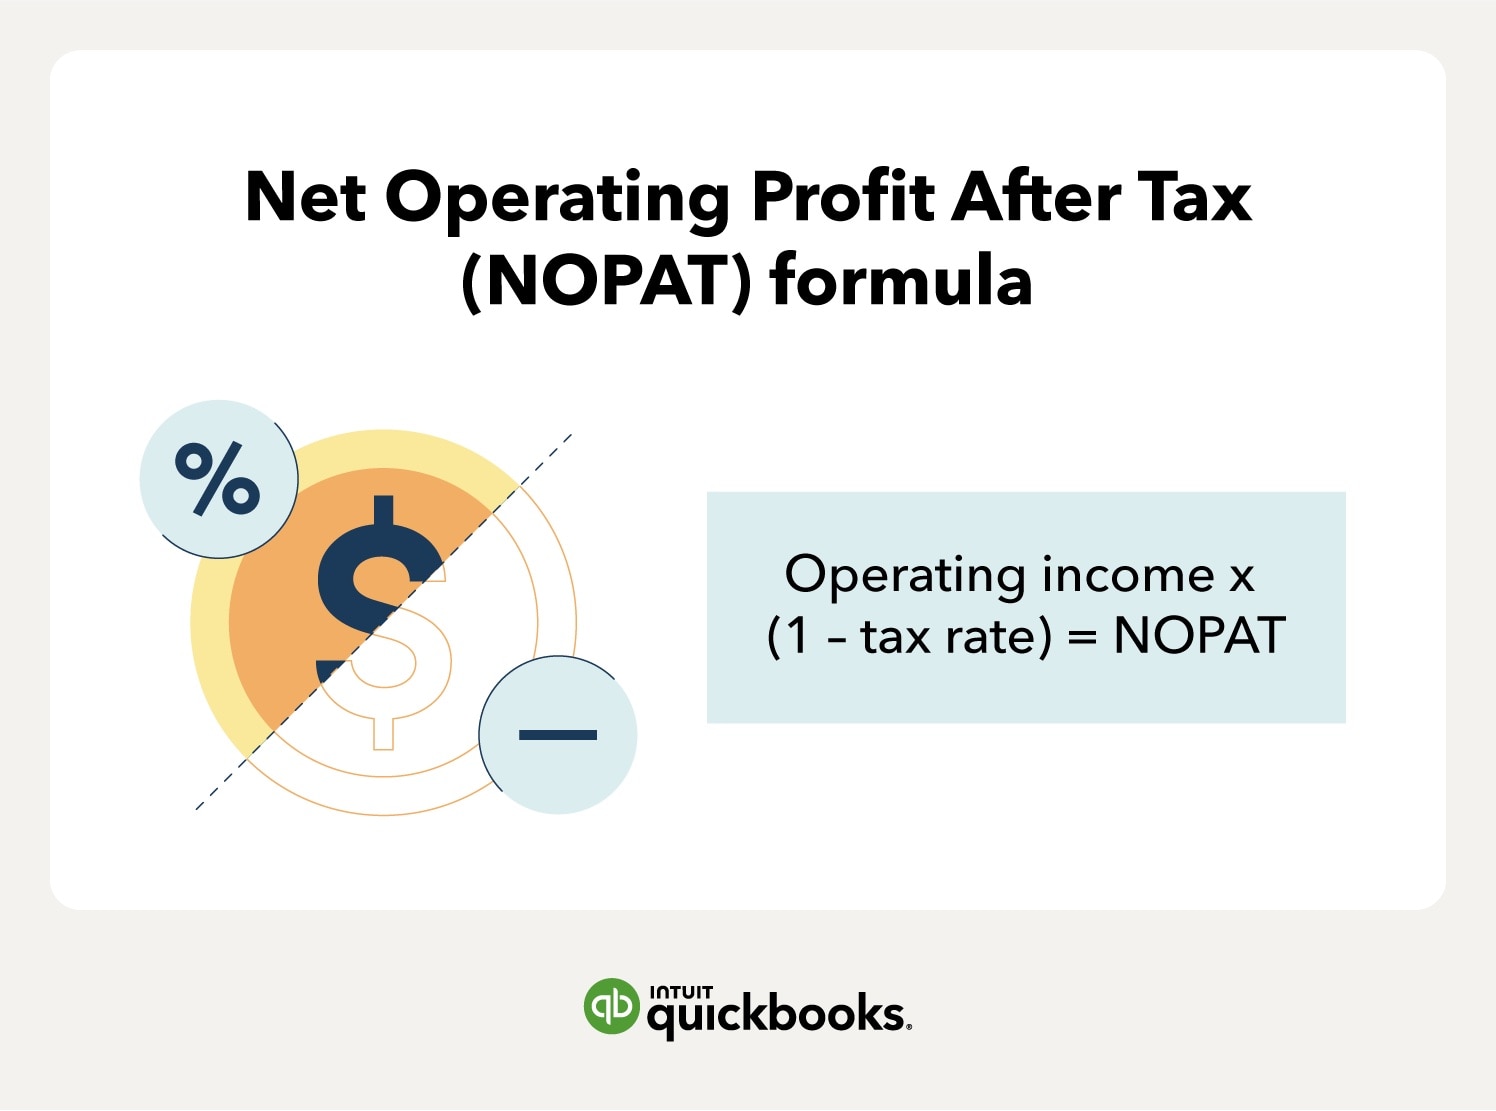 Alt: Operating income x (1 - tax rate) = NOPAT.